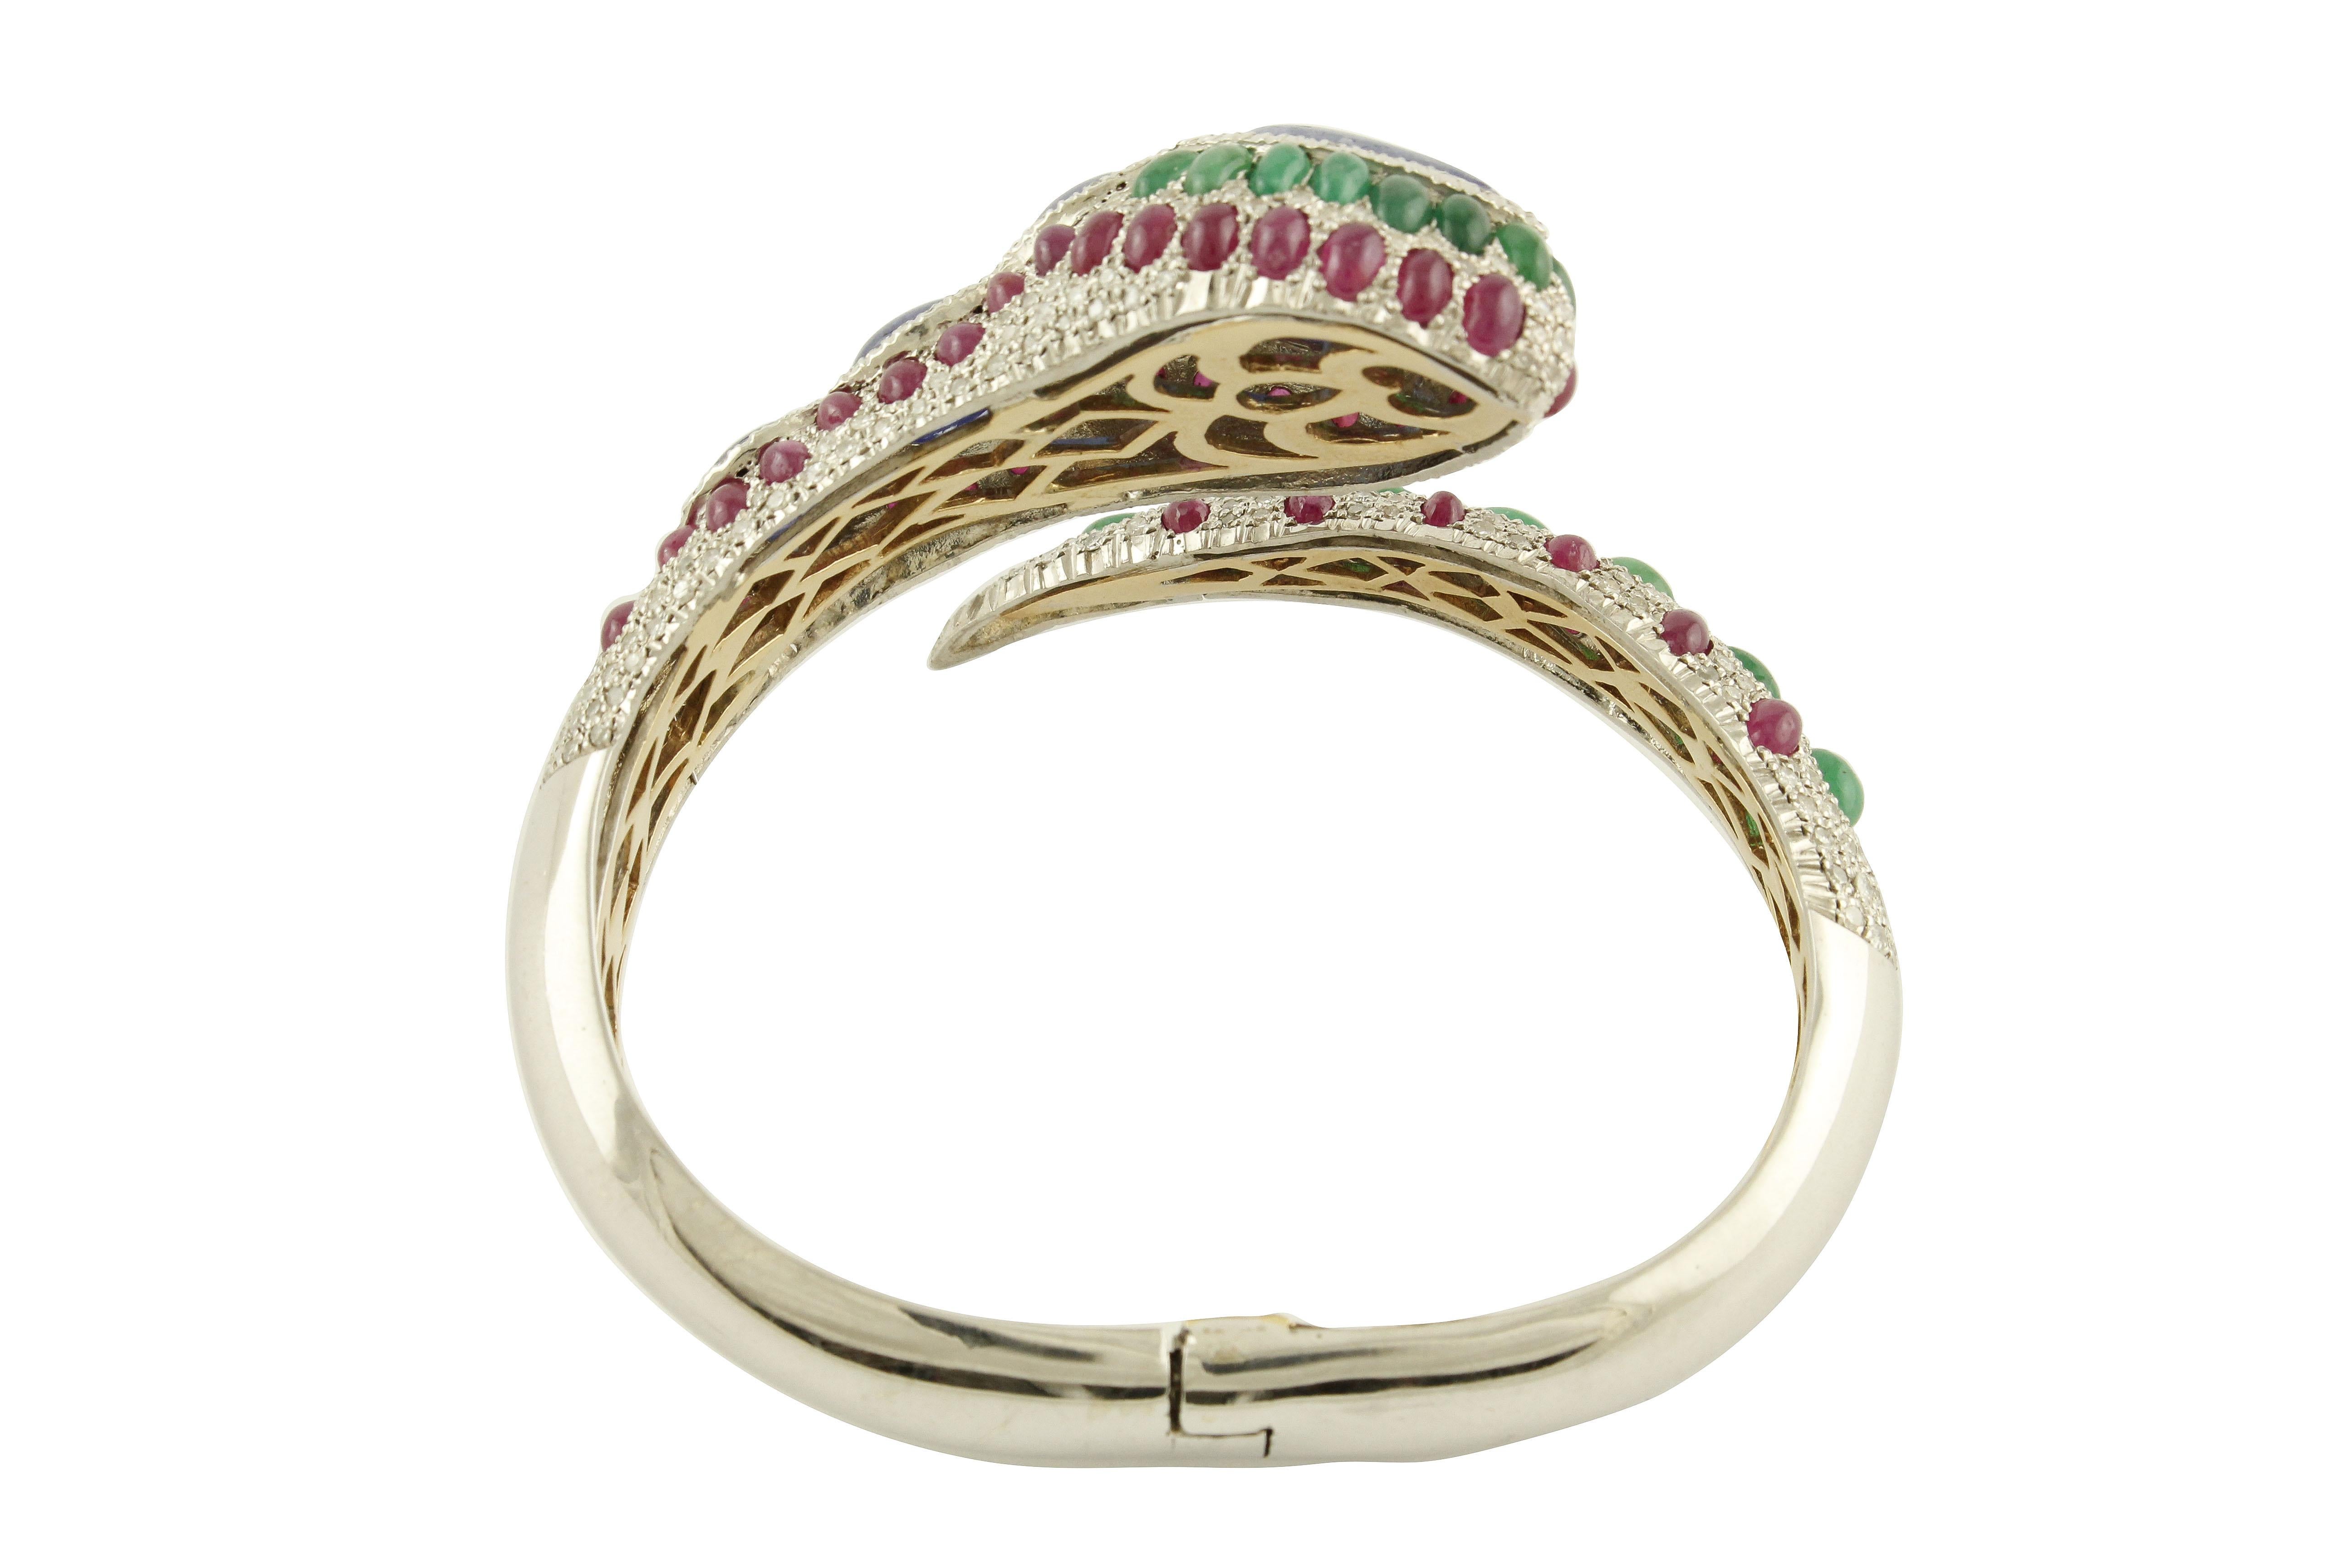 Diamonds Emeralds Rubies Tanzanites White, Rose Gold and Silver Snake Bracelet 2